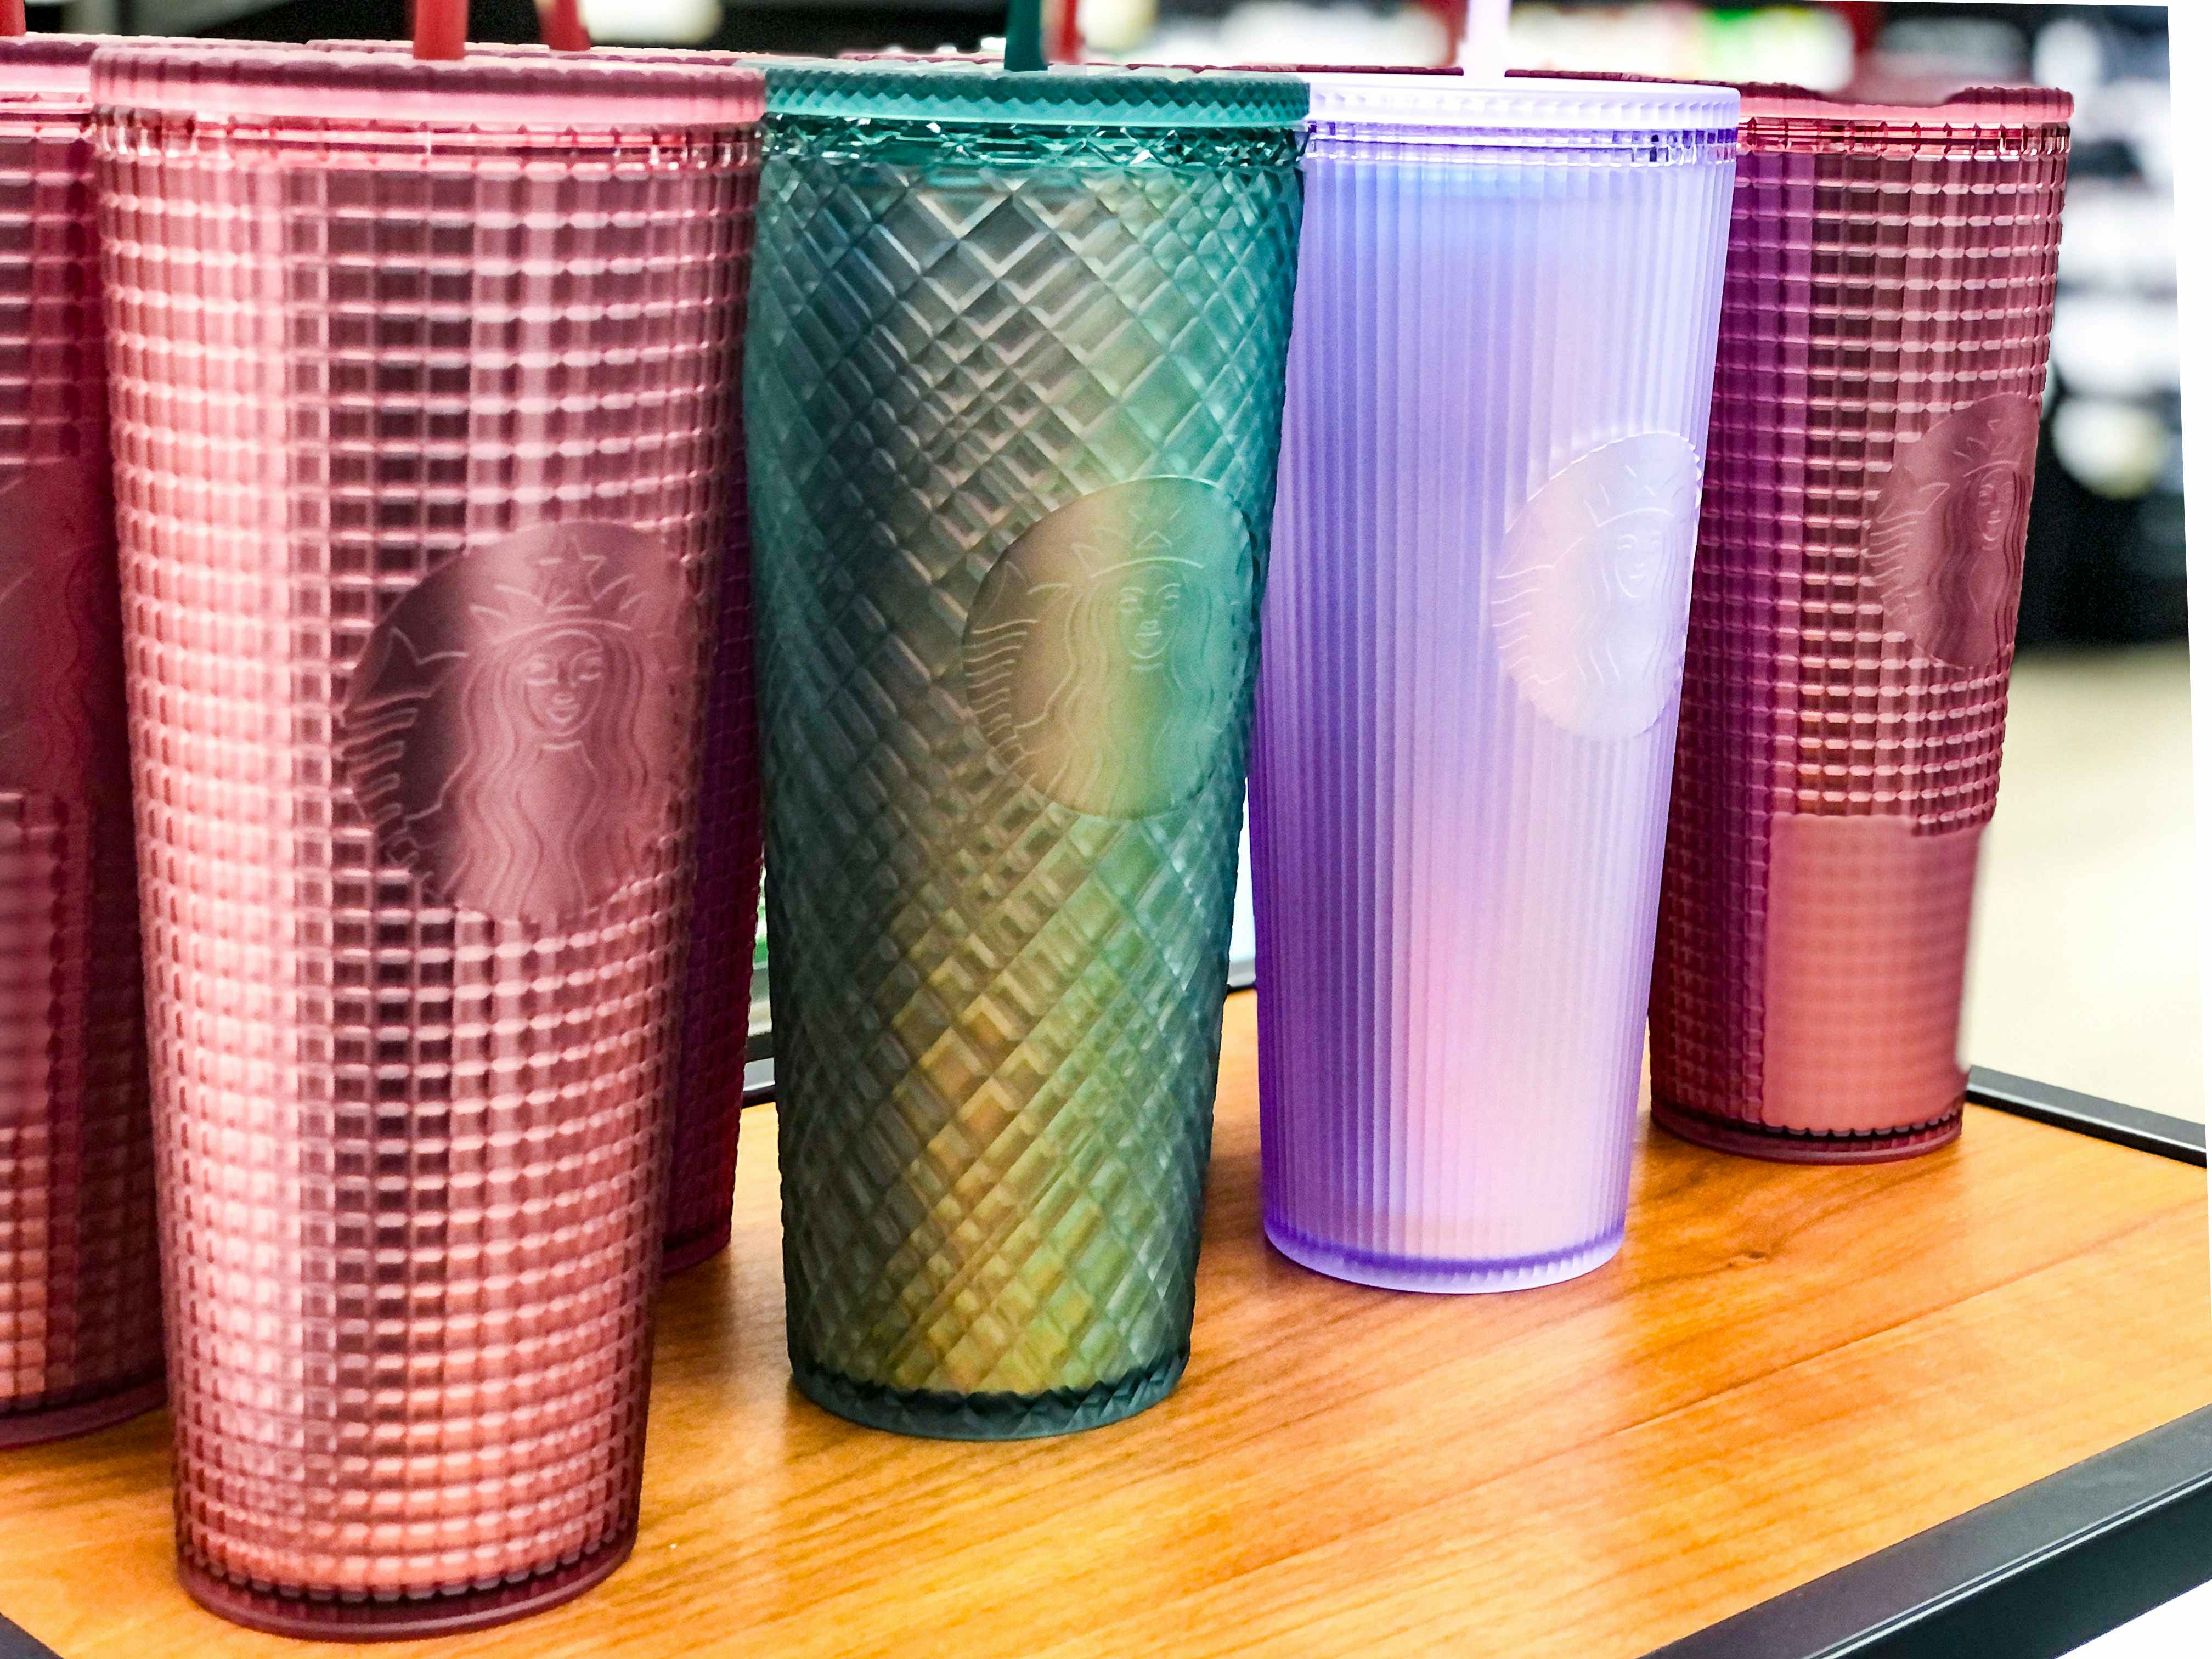 Starbucks Core Plastic Cold Cup - Black, 16 oz - Kroger